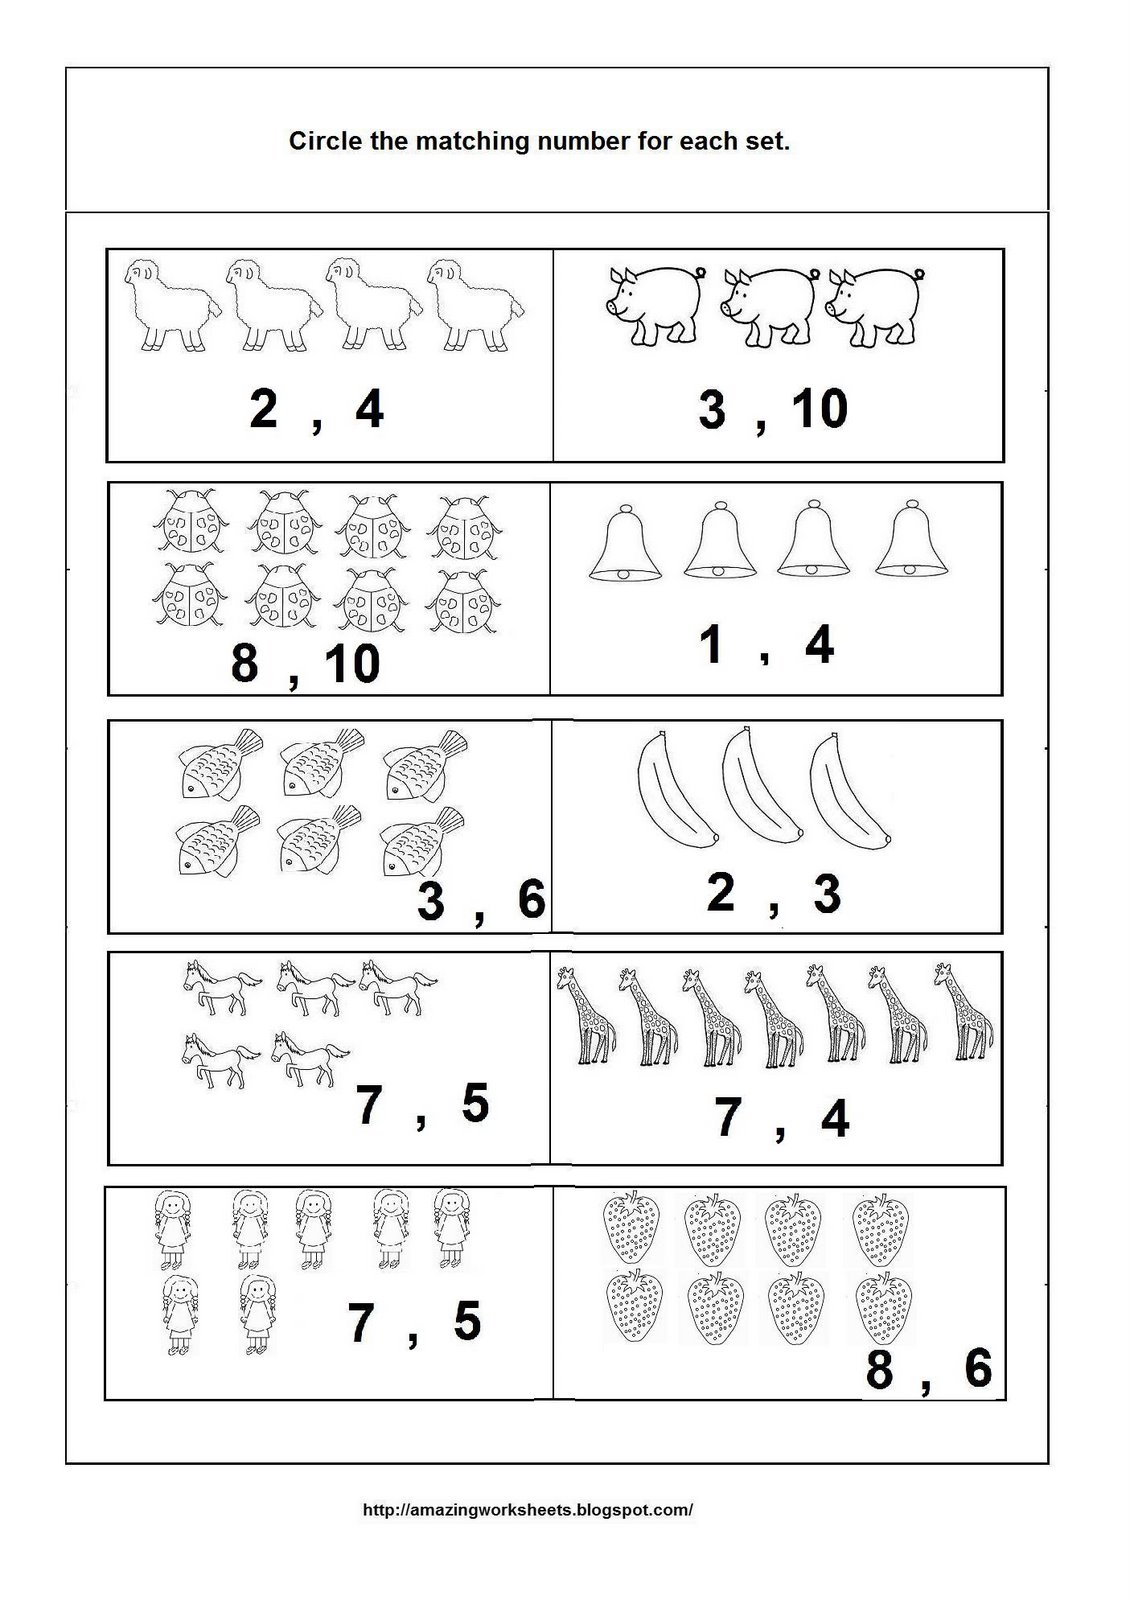  kindergarten worksheets | Preschool worksheets | Printables for kids | #66